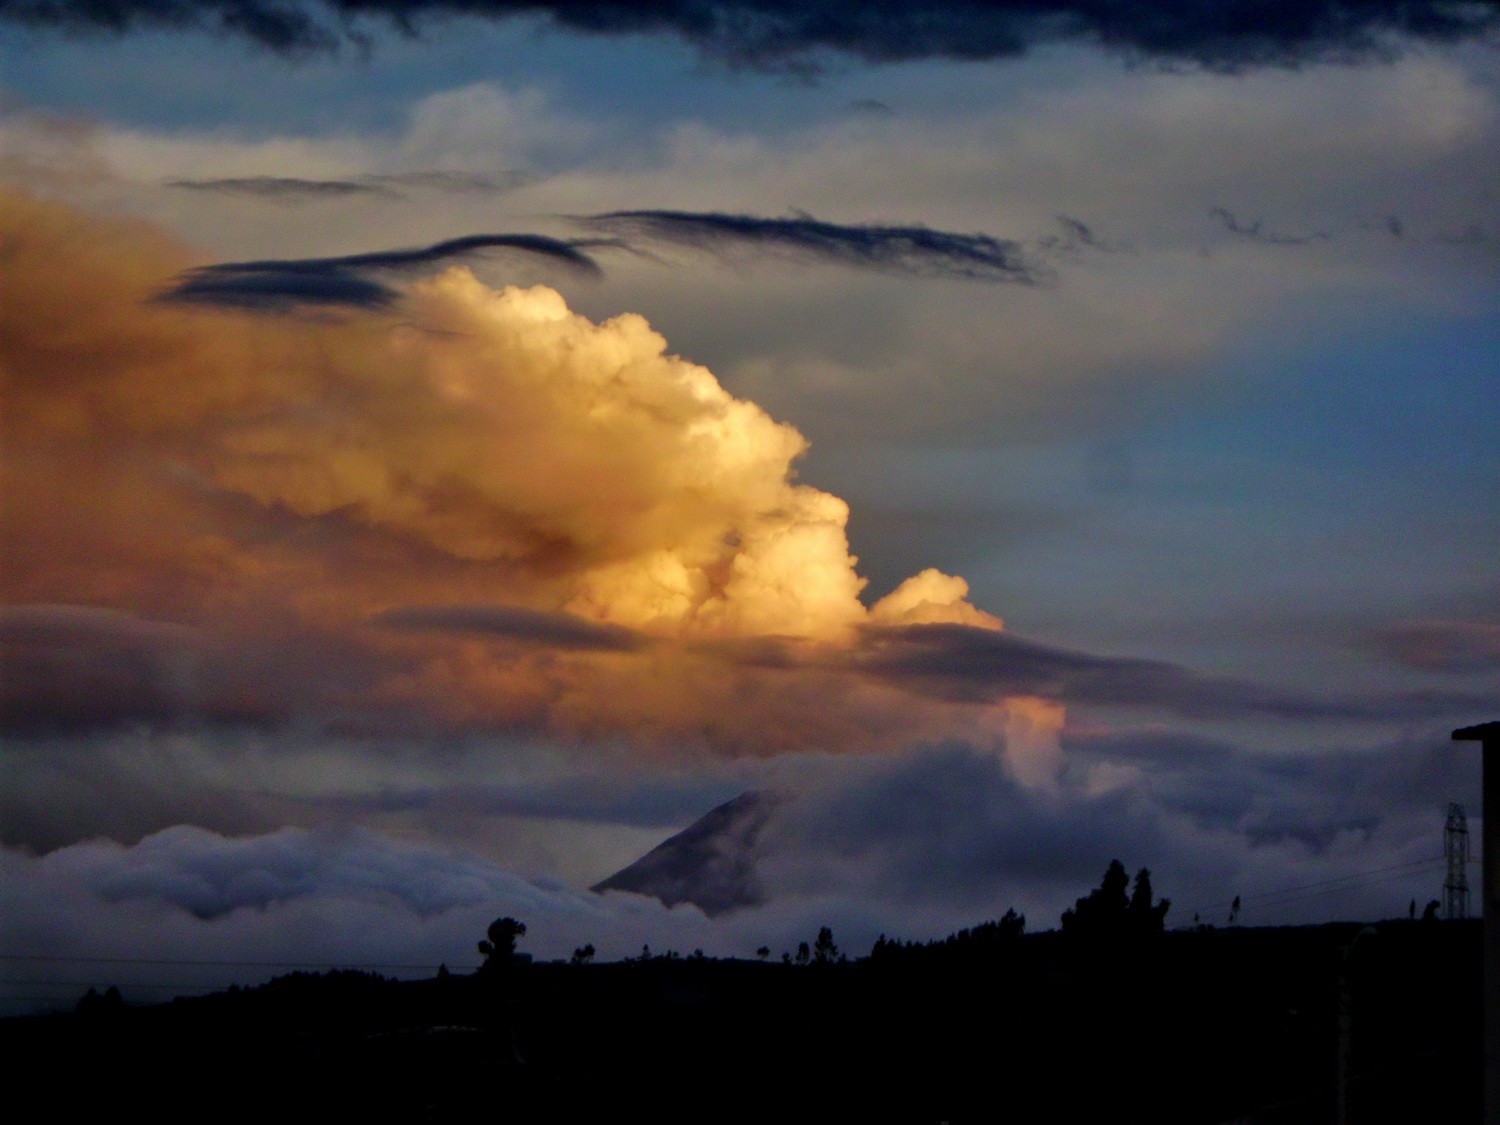 Volcan Tungurahua at sunset